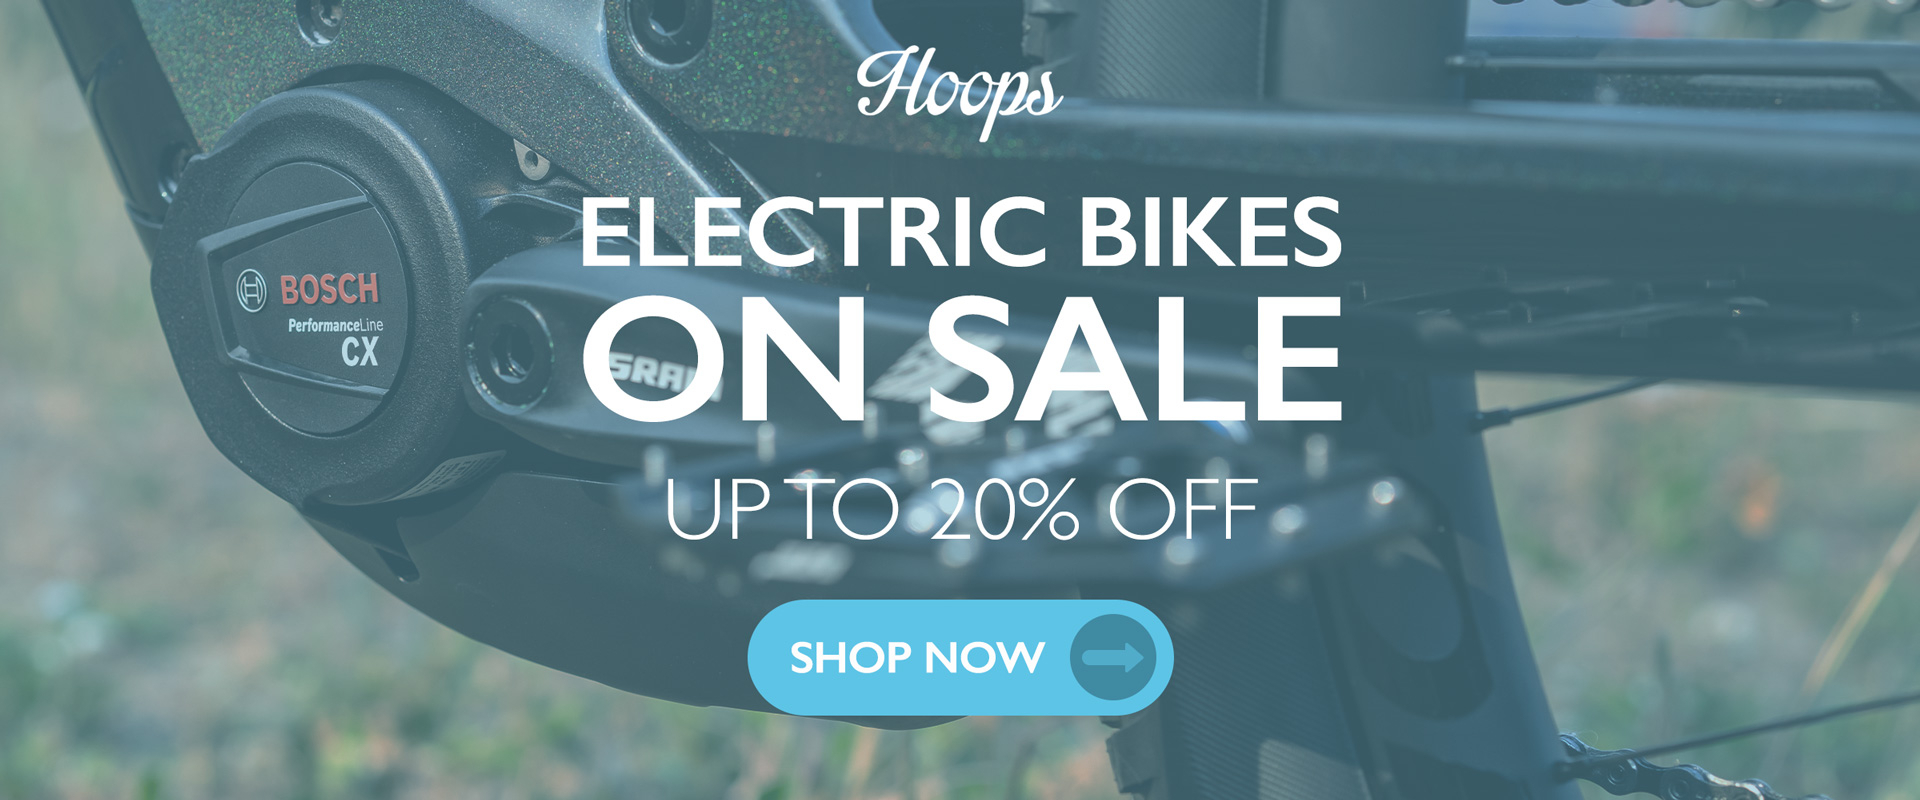 Electric Bike Sale